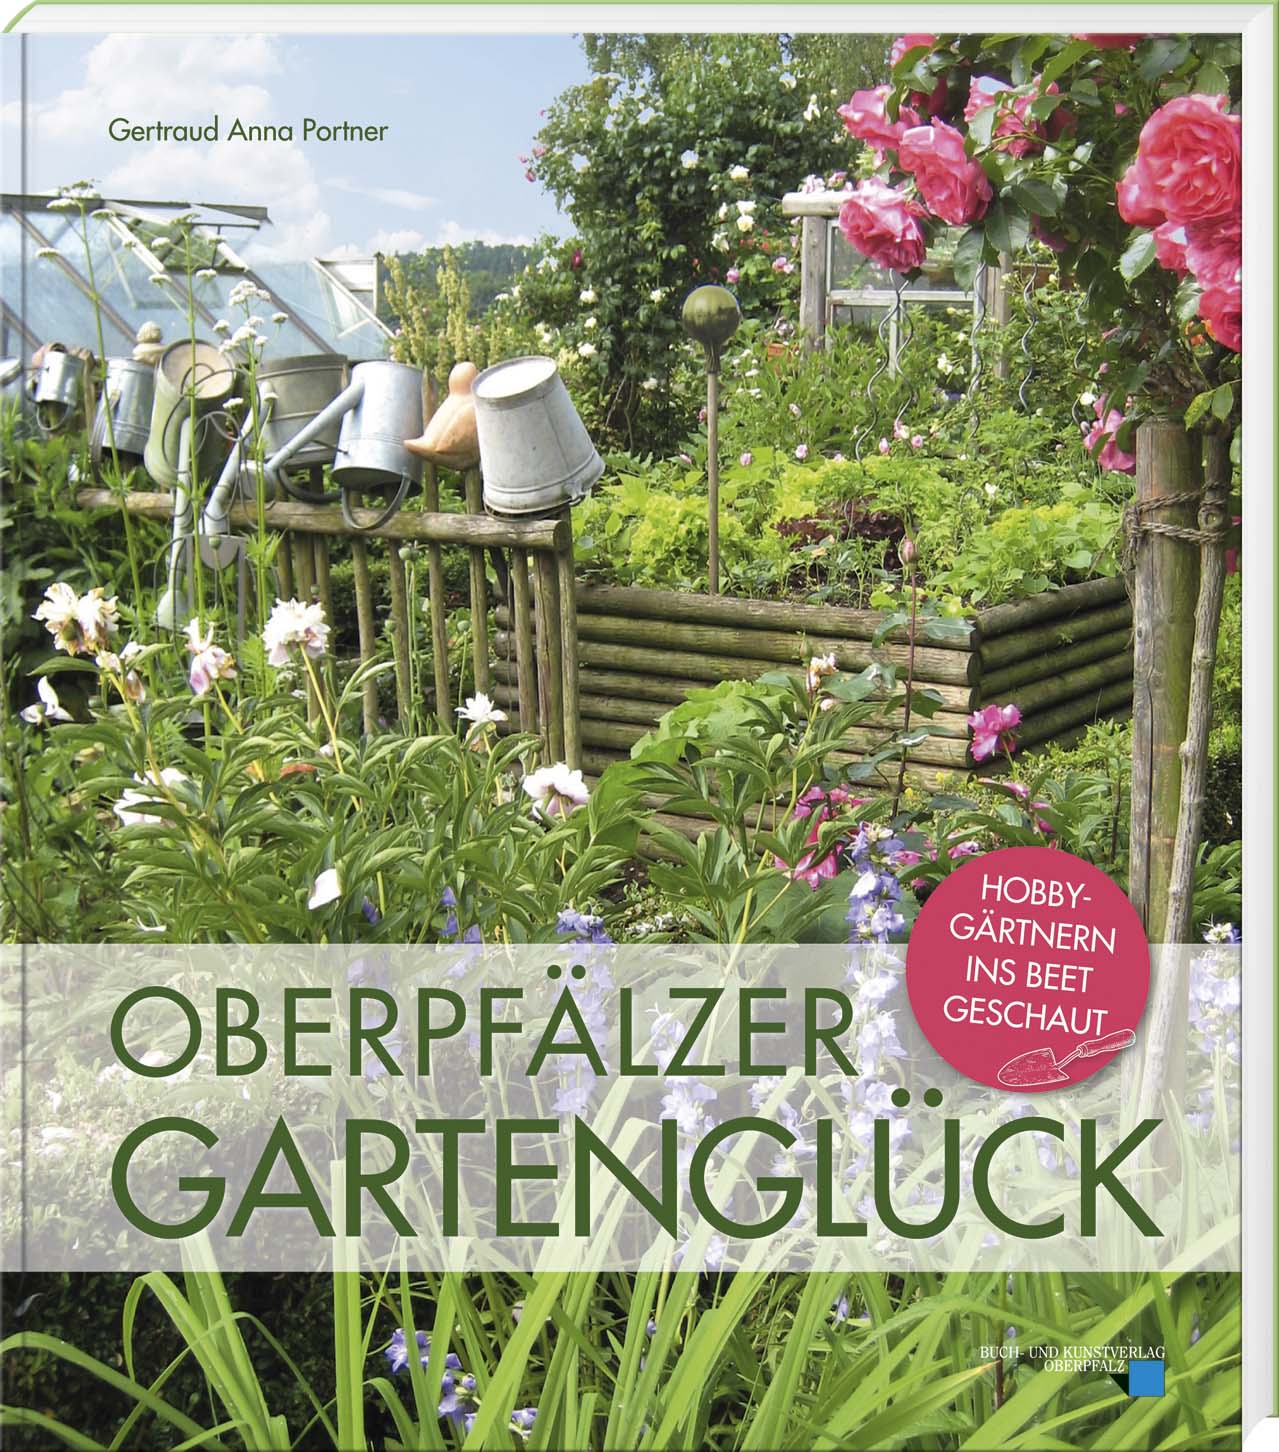 Portner Gertraud Anna - Oberpfälzer Gartenglück